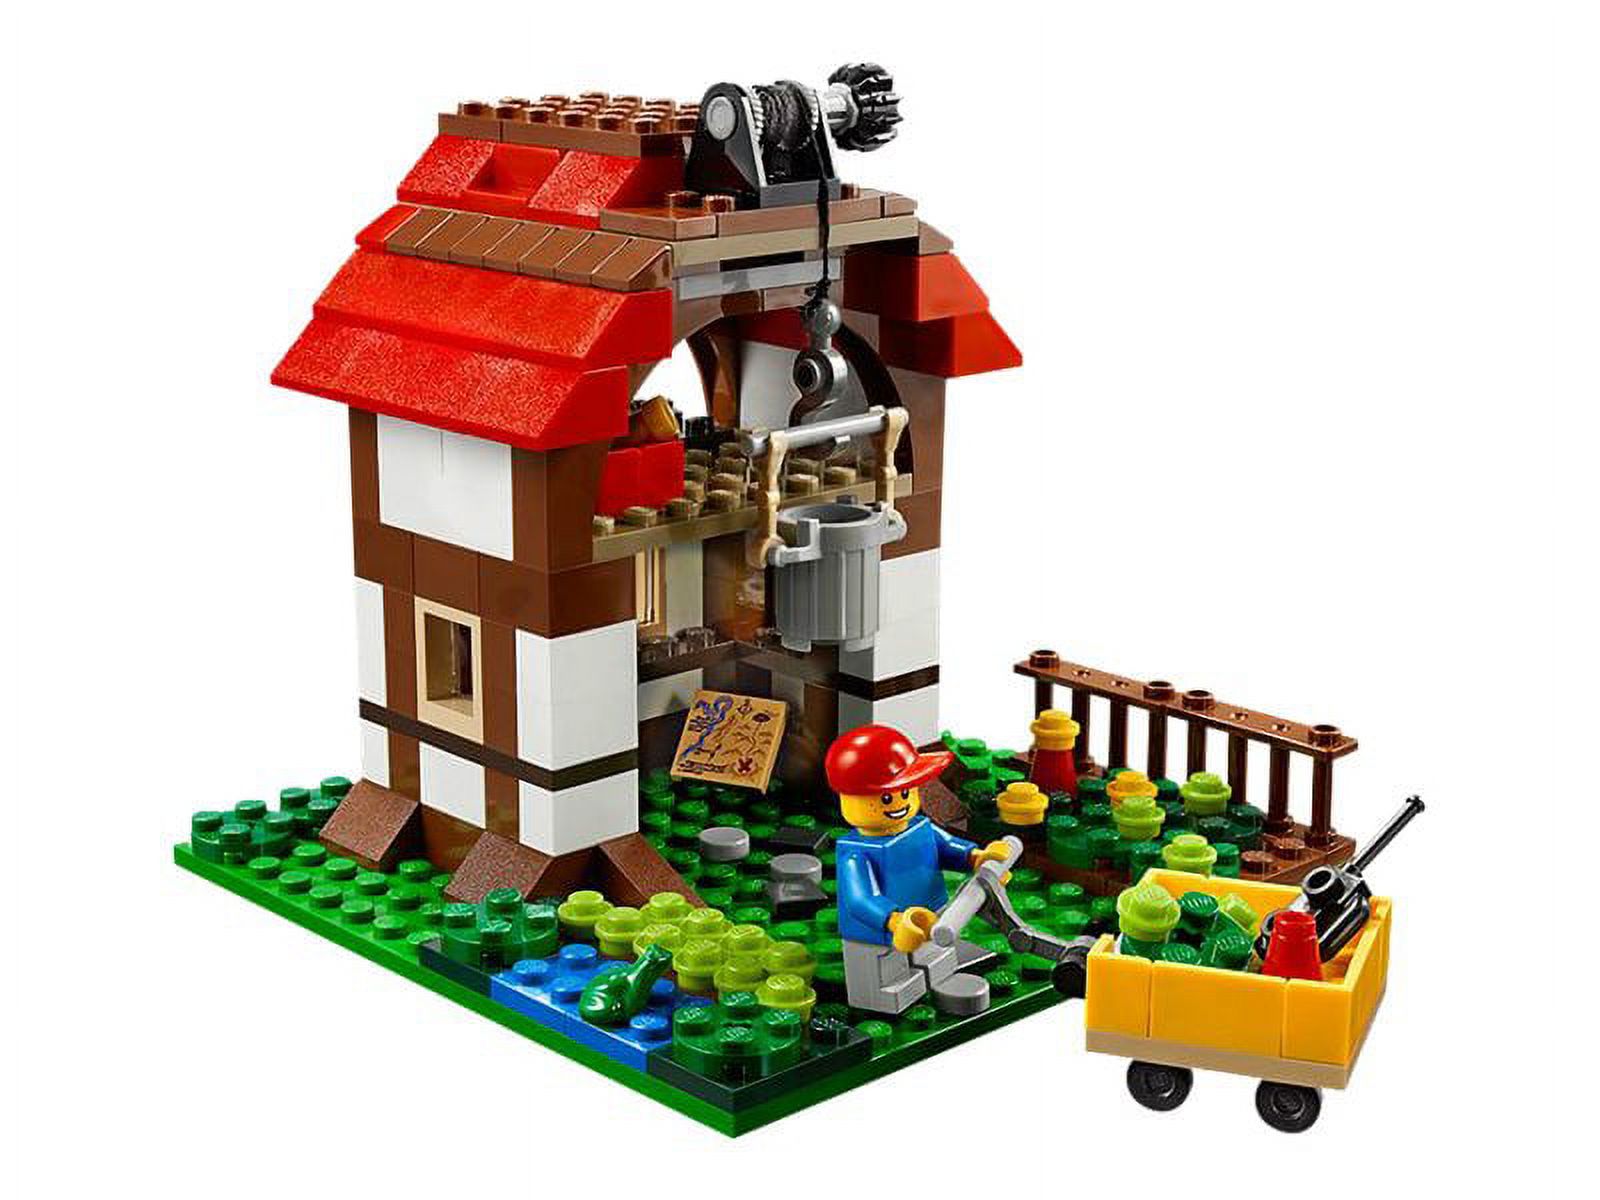 LEGO Creator 31010 - Tree House - image 3 of 4